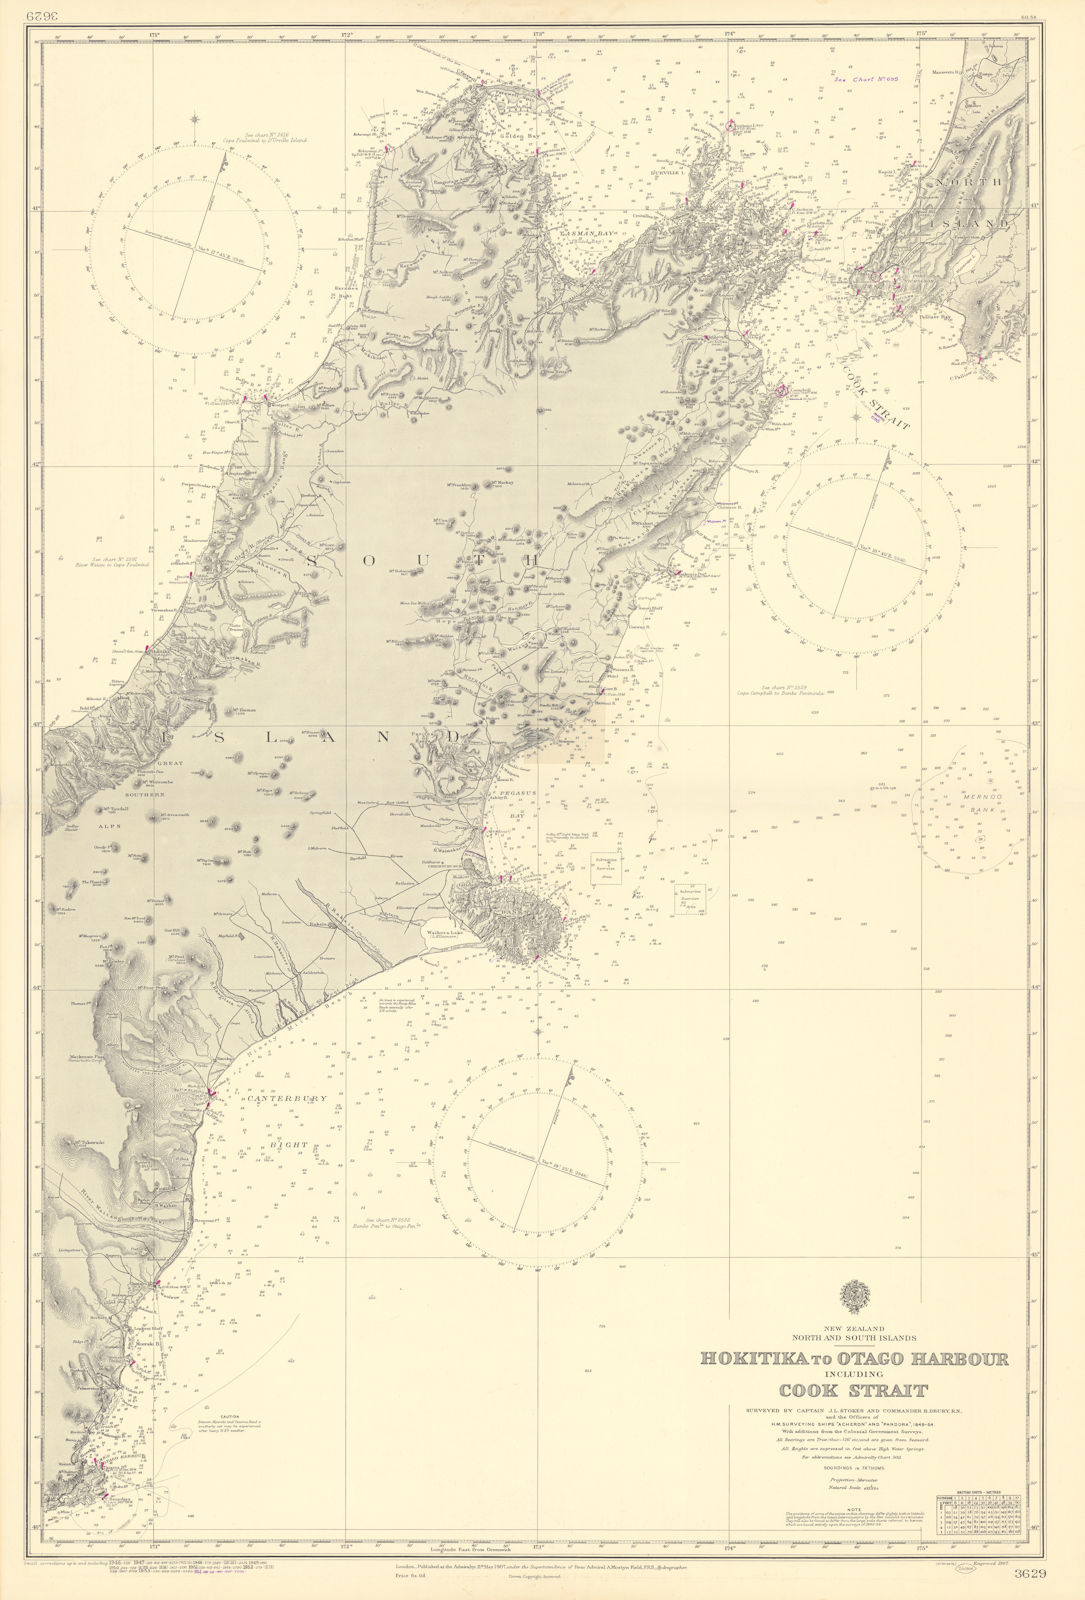 South Island New Zealand Hokitika-Otago Harbour ADMIRALTY chart 1907 (1954) map